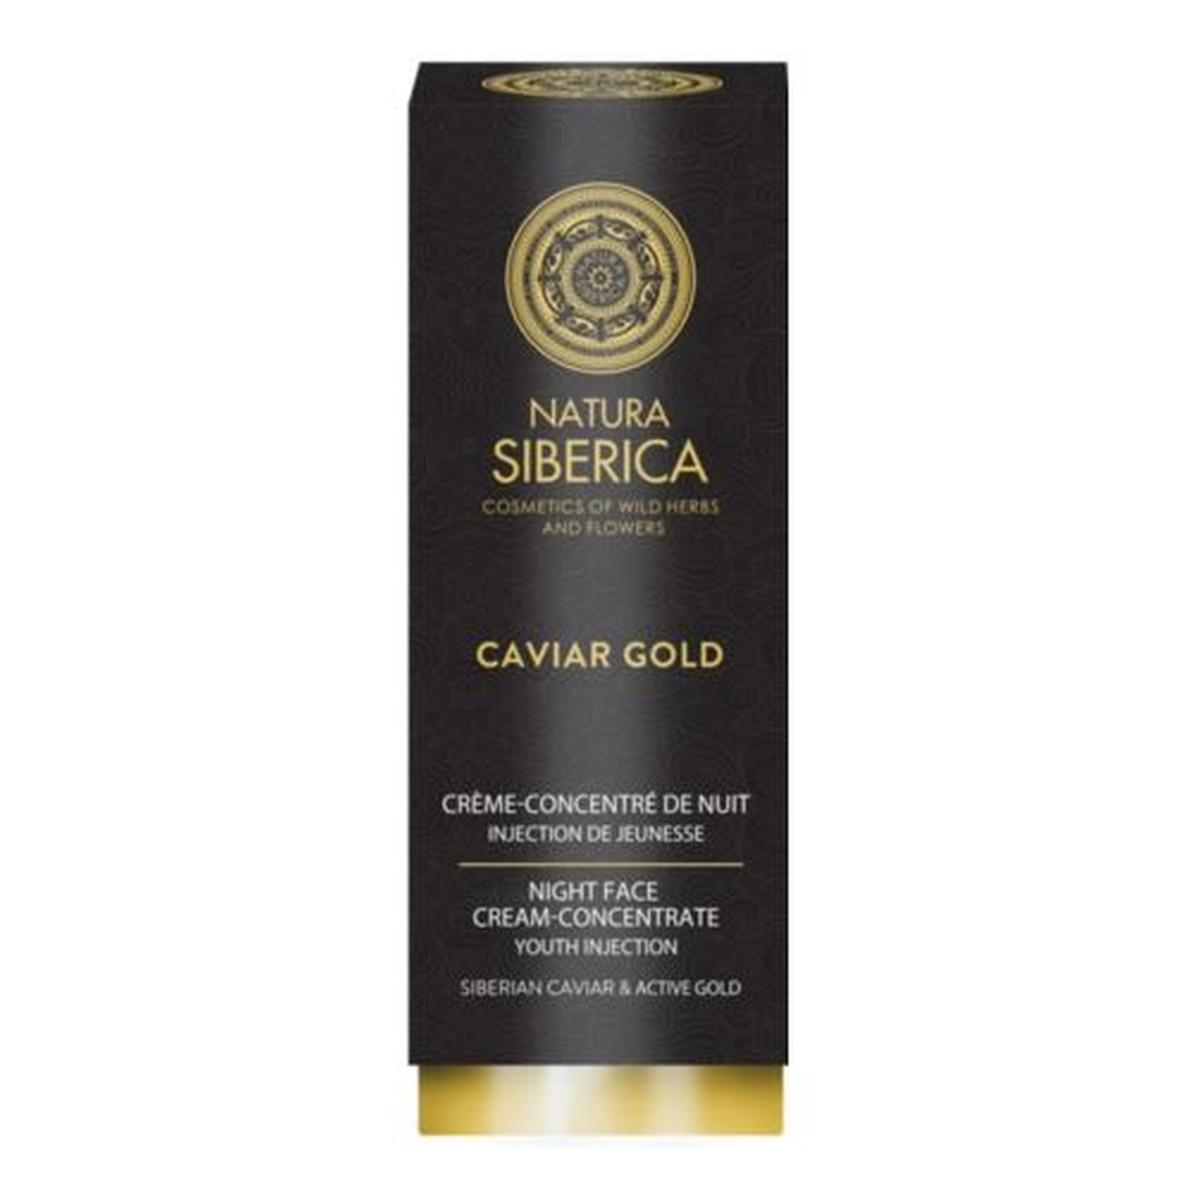 Natura Siberica Caviar Gold Night Face Cream-Contentrate krem-koncentrat do twarzy na noc 30ml